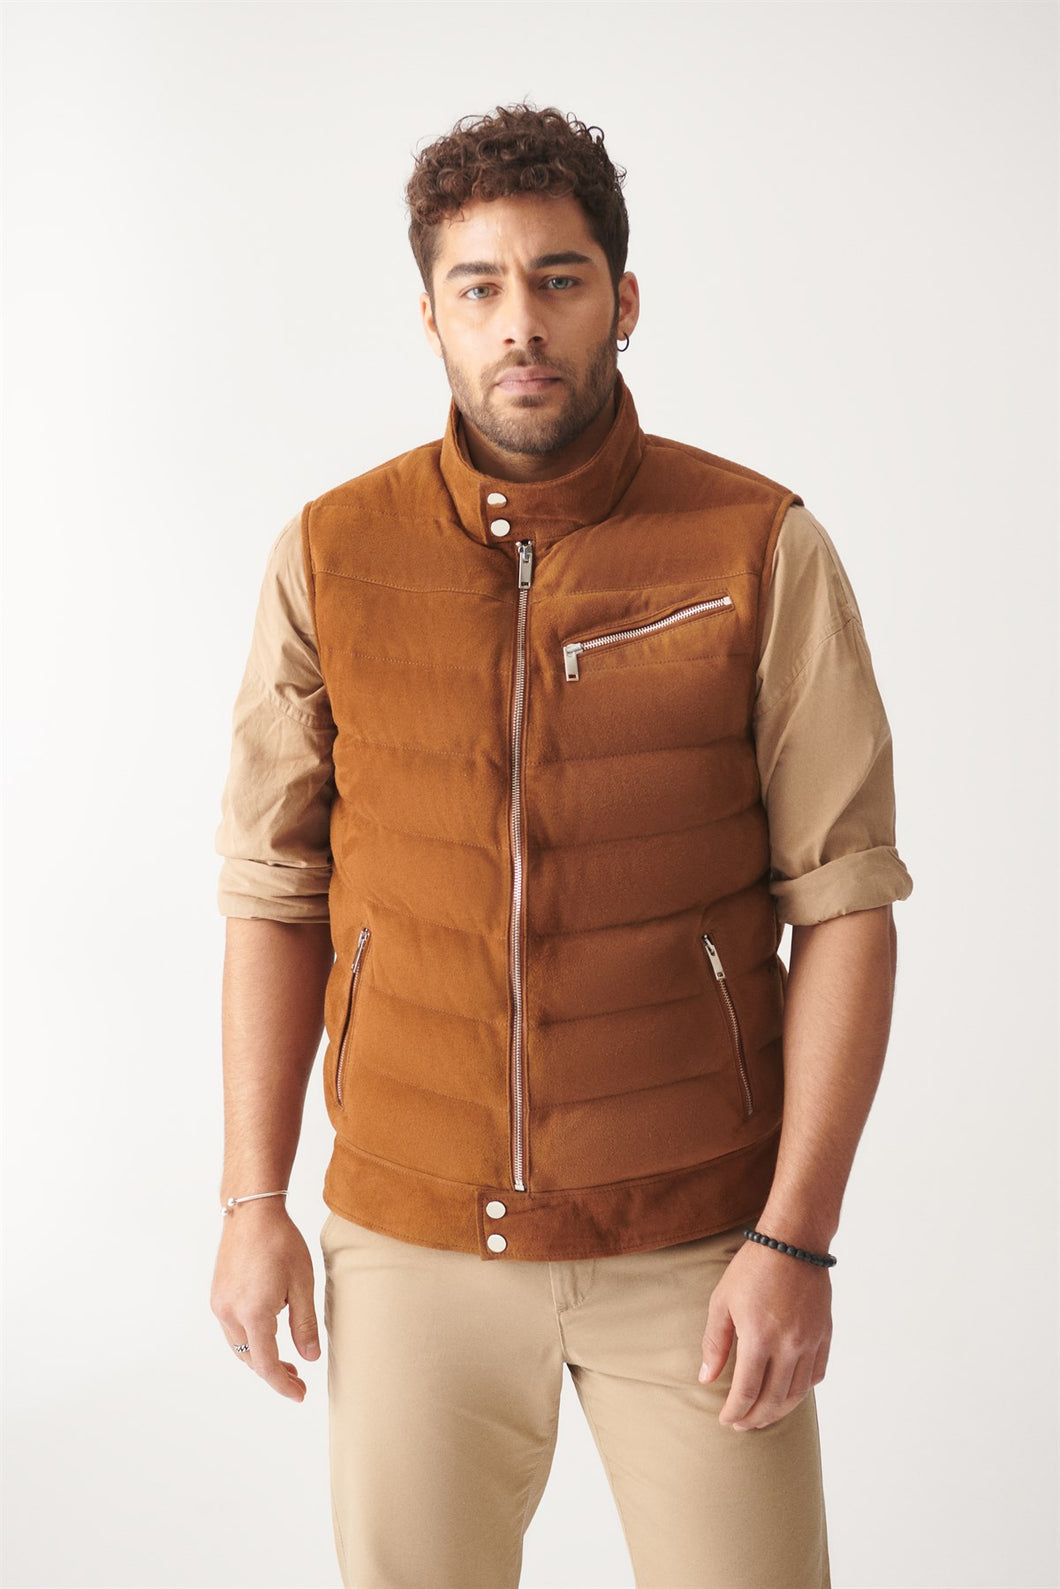 Men's Casual Tan Suede Leather Vest